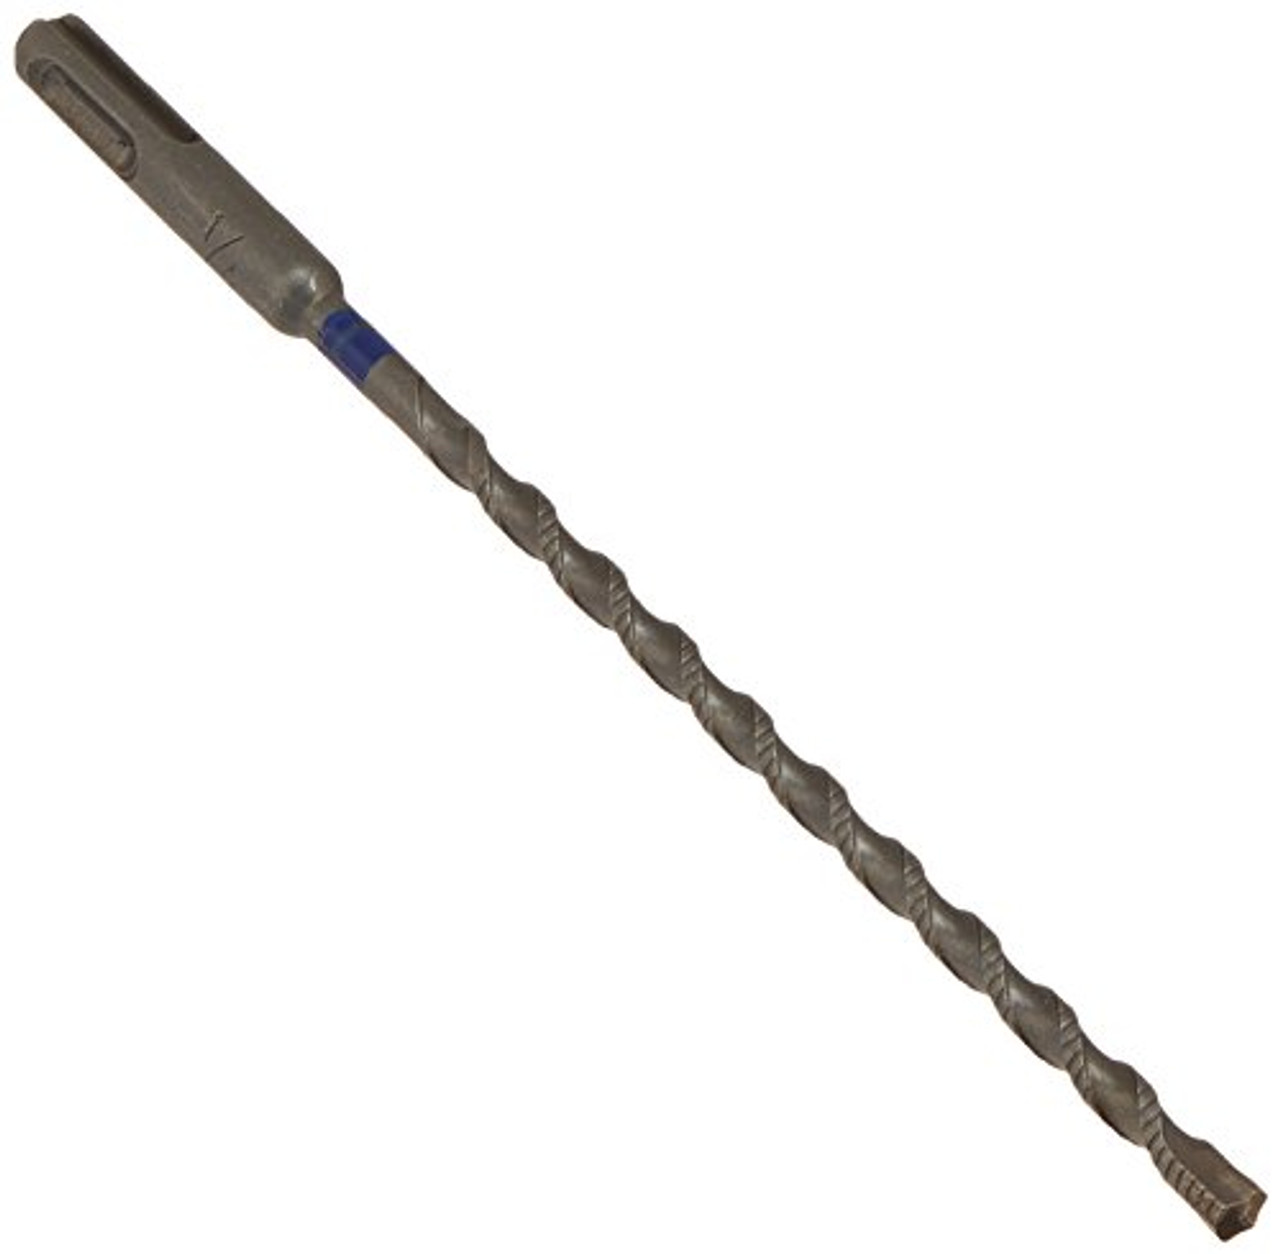 Irwin Tools 4935446 Single Speedhammer Power Masonry Drill Bit, 1/4" x 6" x 8"